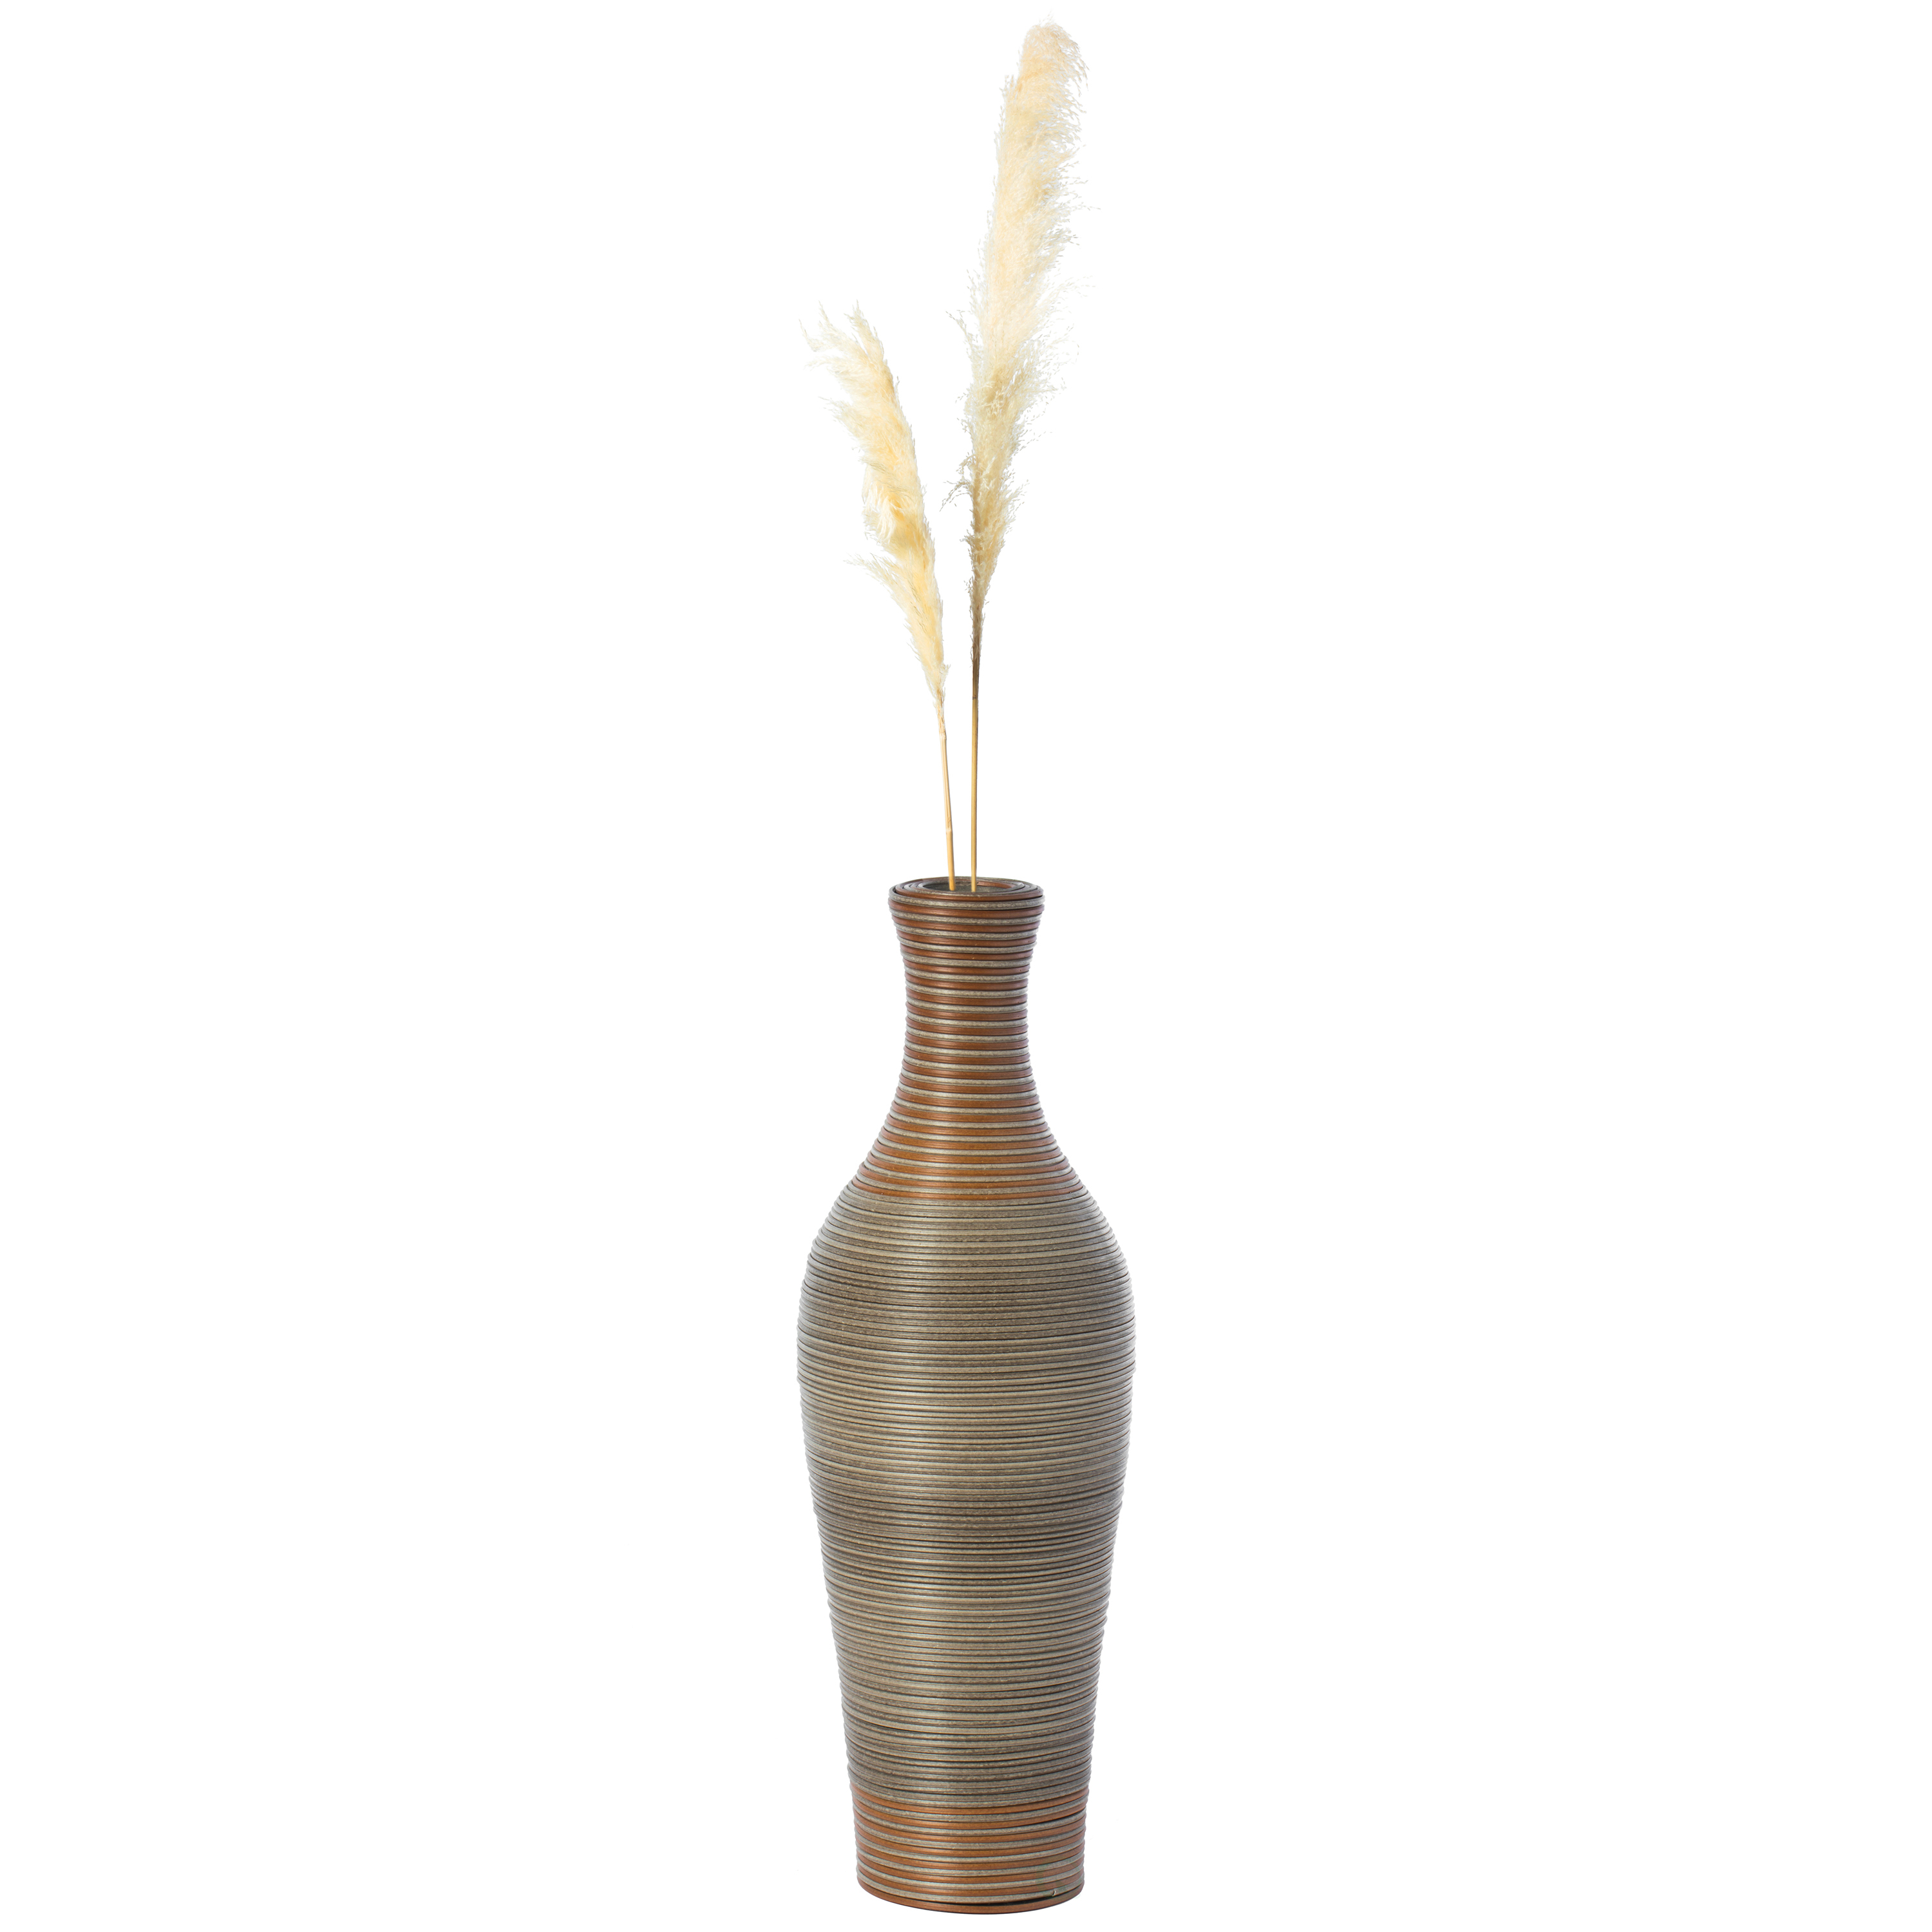 27 Inch Tall Decorative Artificial Rattan Tabletop Centerpiece Vase